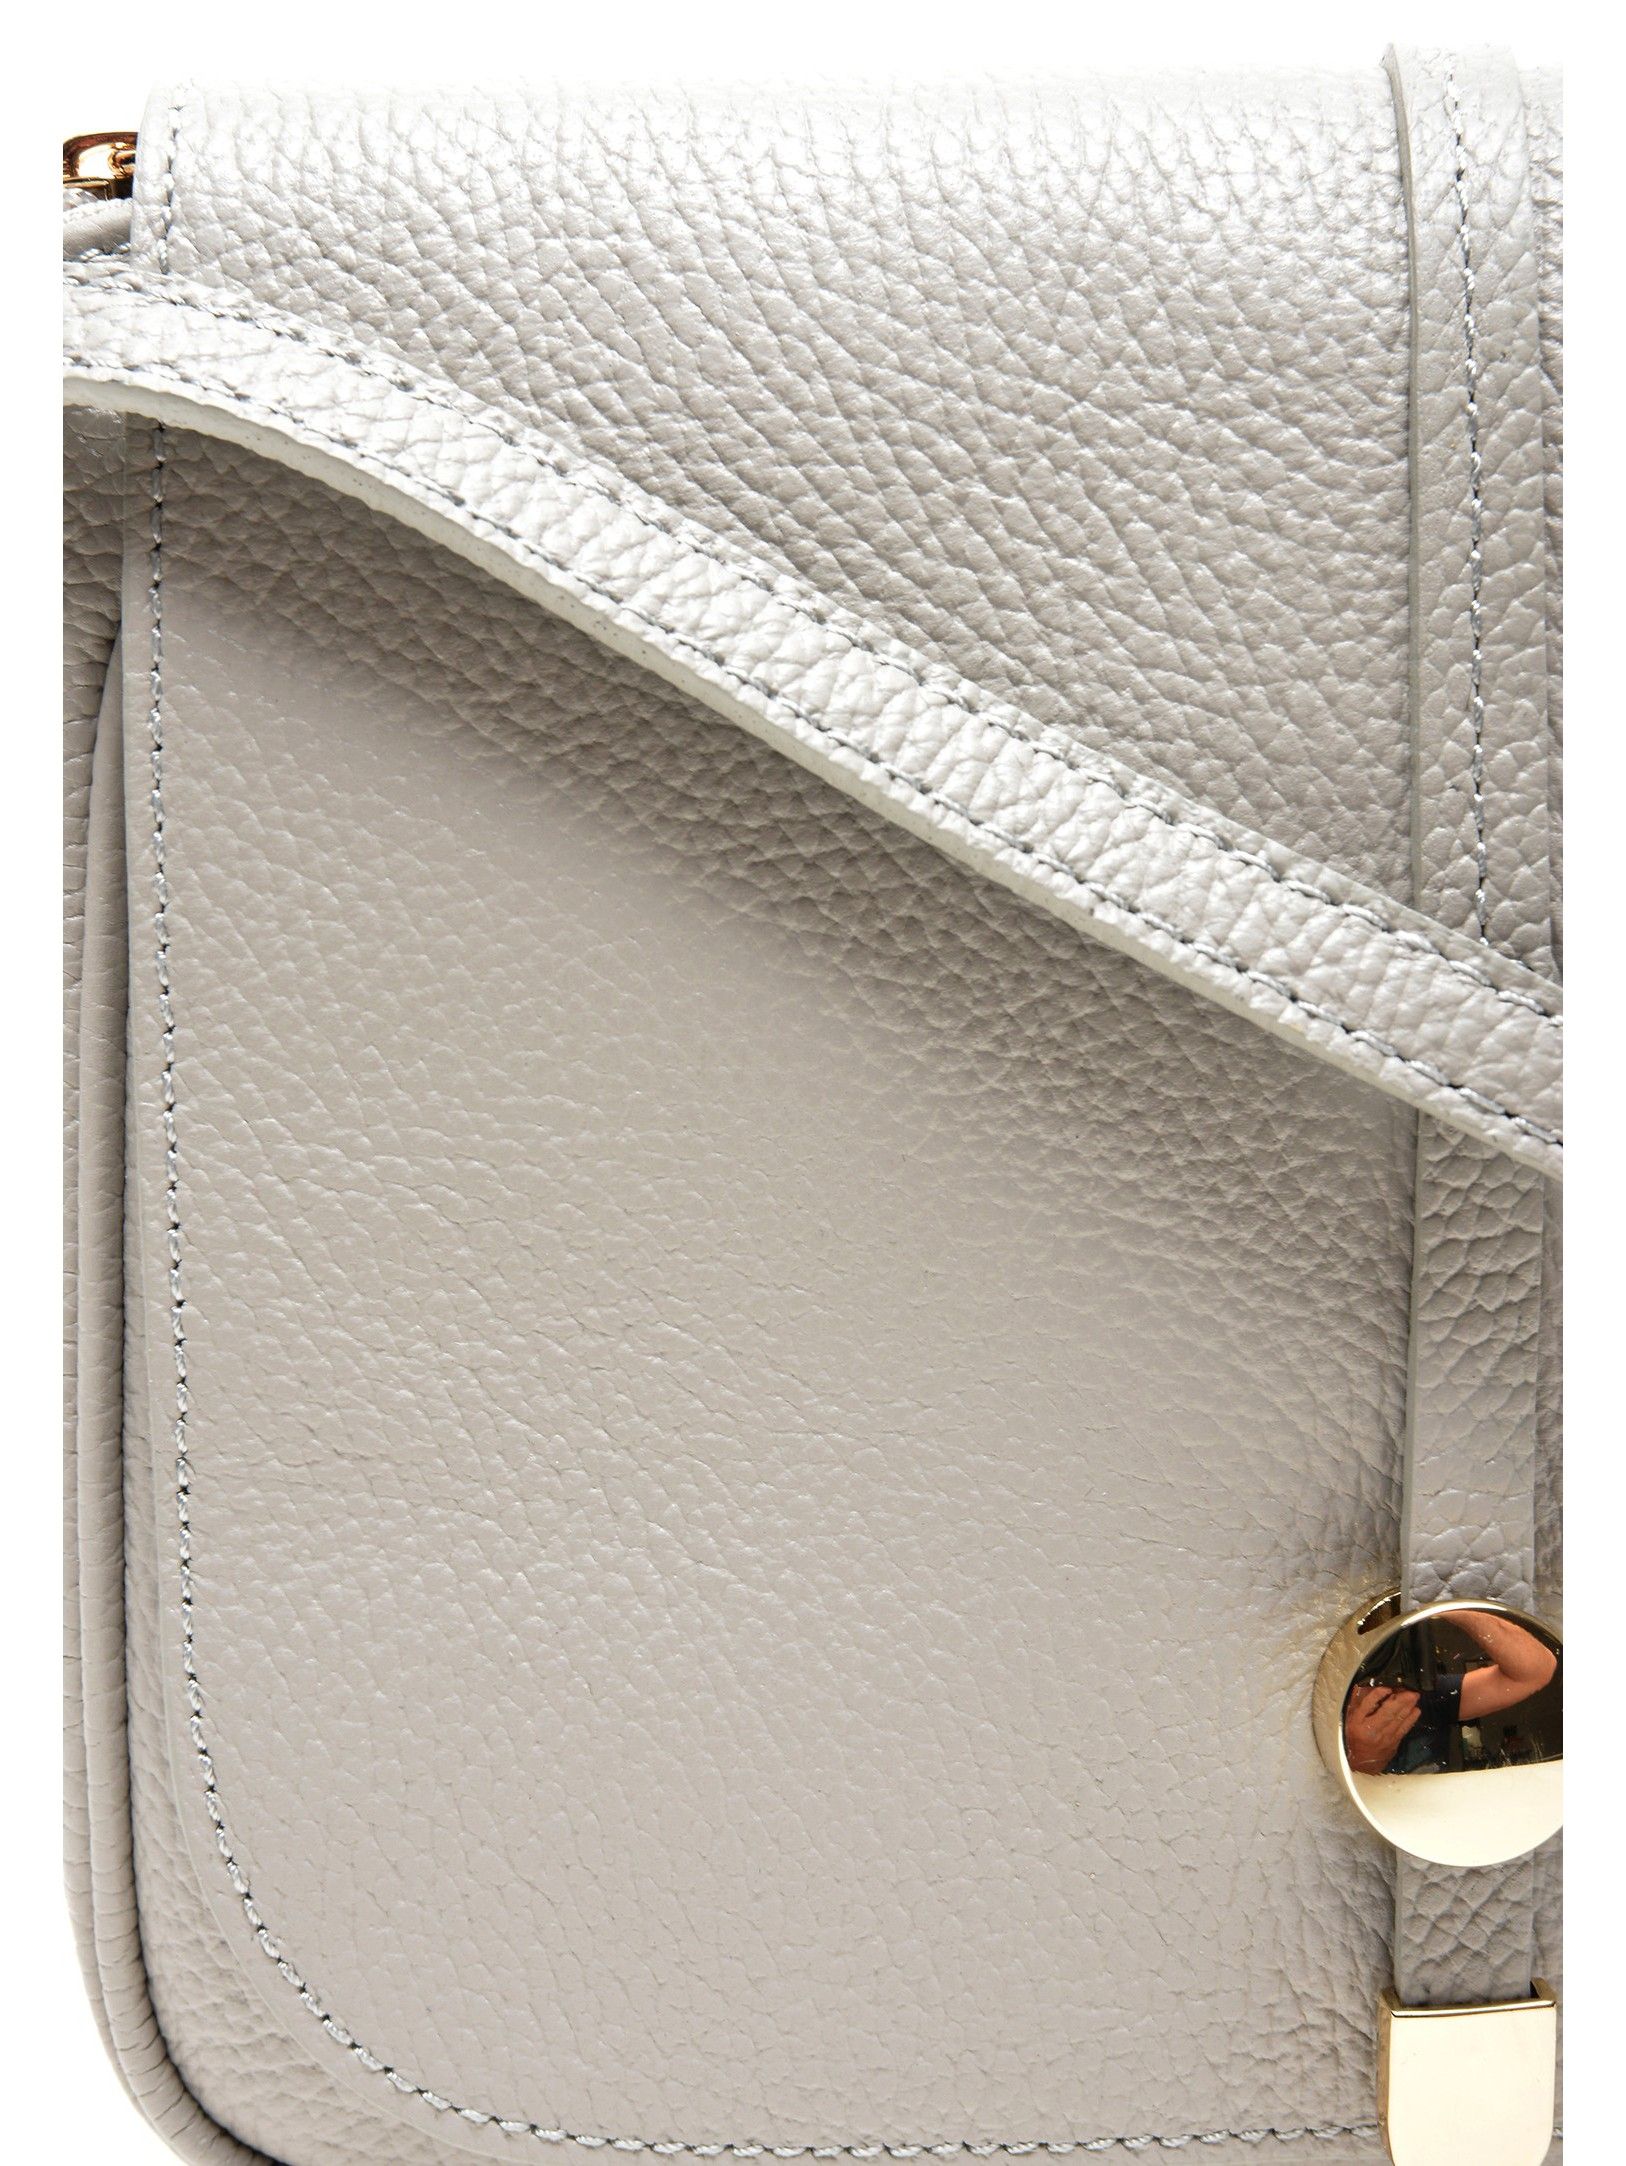 Shoulder Bag
100% cow leather
Flap over closure with internal zip
Internal zip pocket
Back zip pocket
Detachable shoulder strap: 120 cm
Dimensions (L): 21x25x6cm